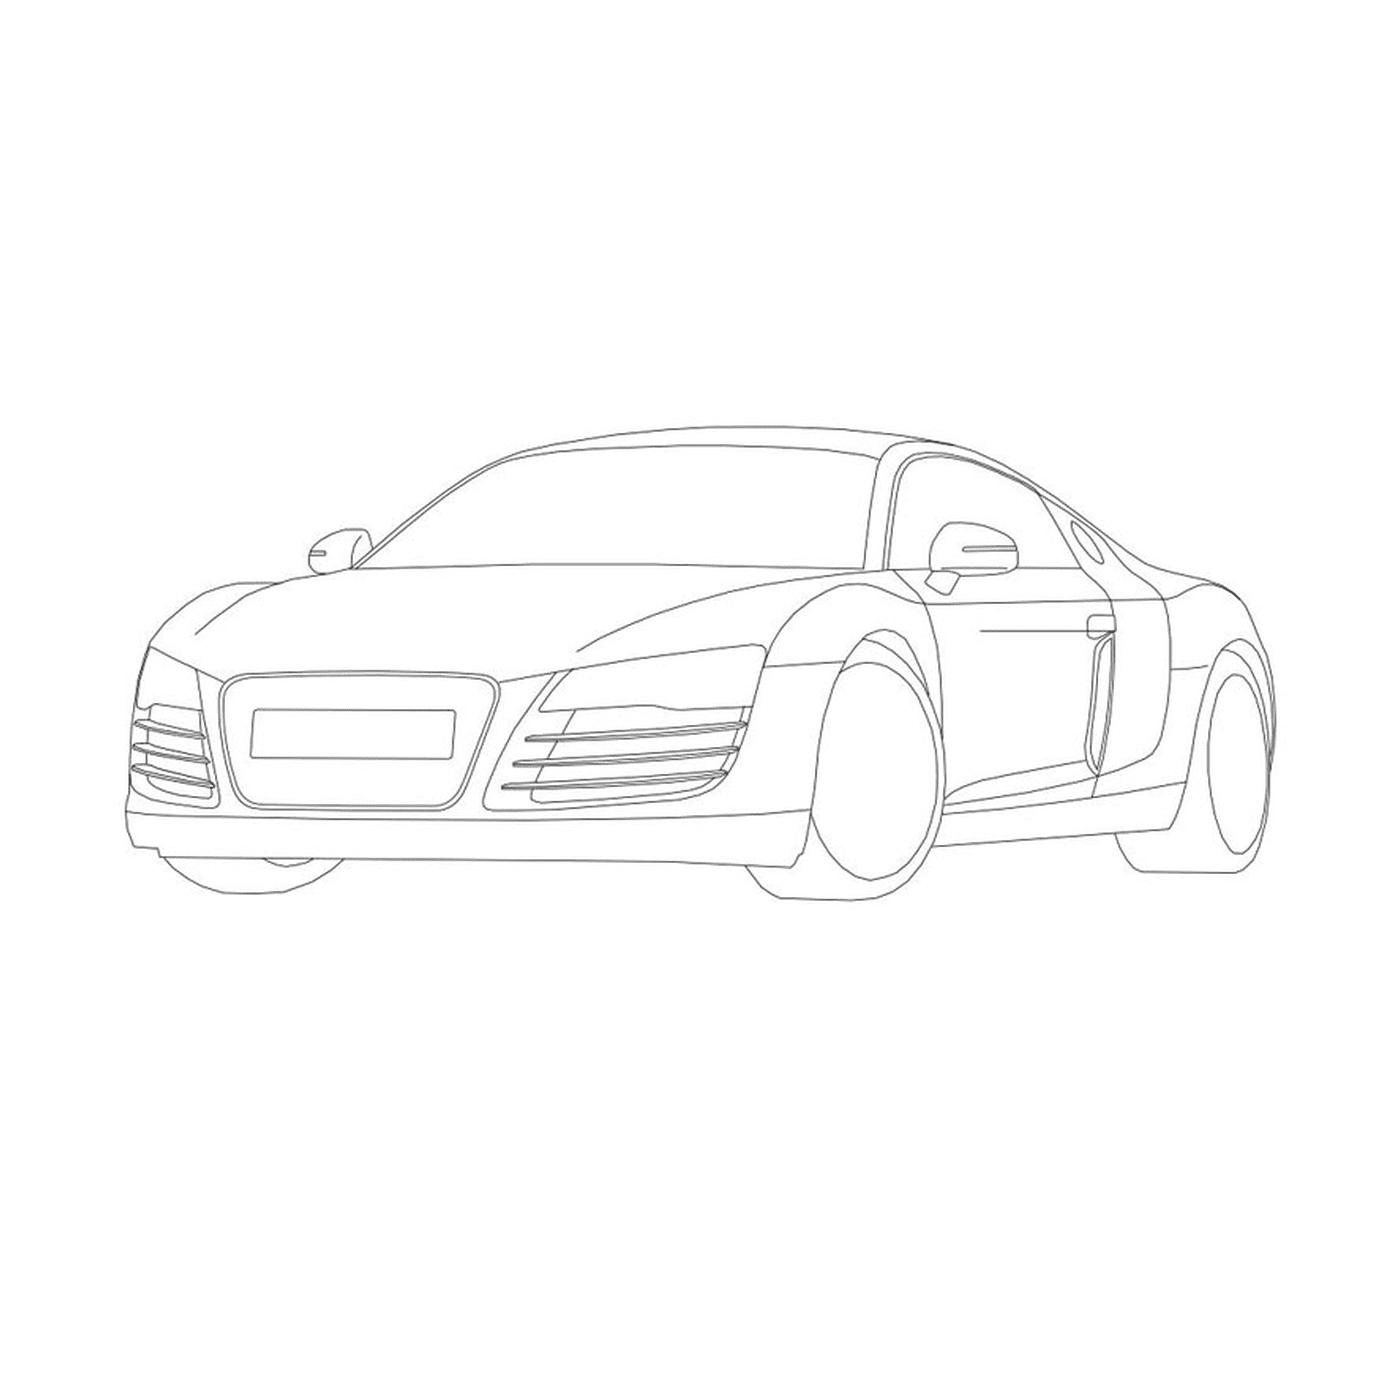  Car Audi R8 drawn 